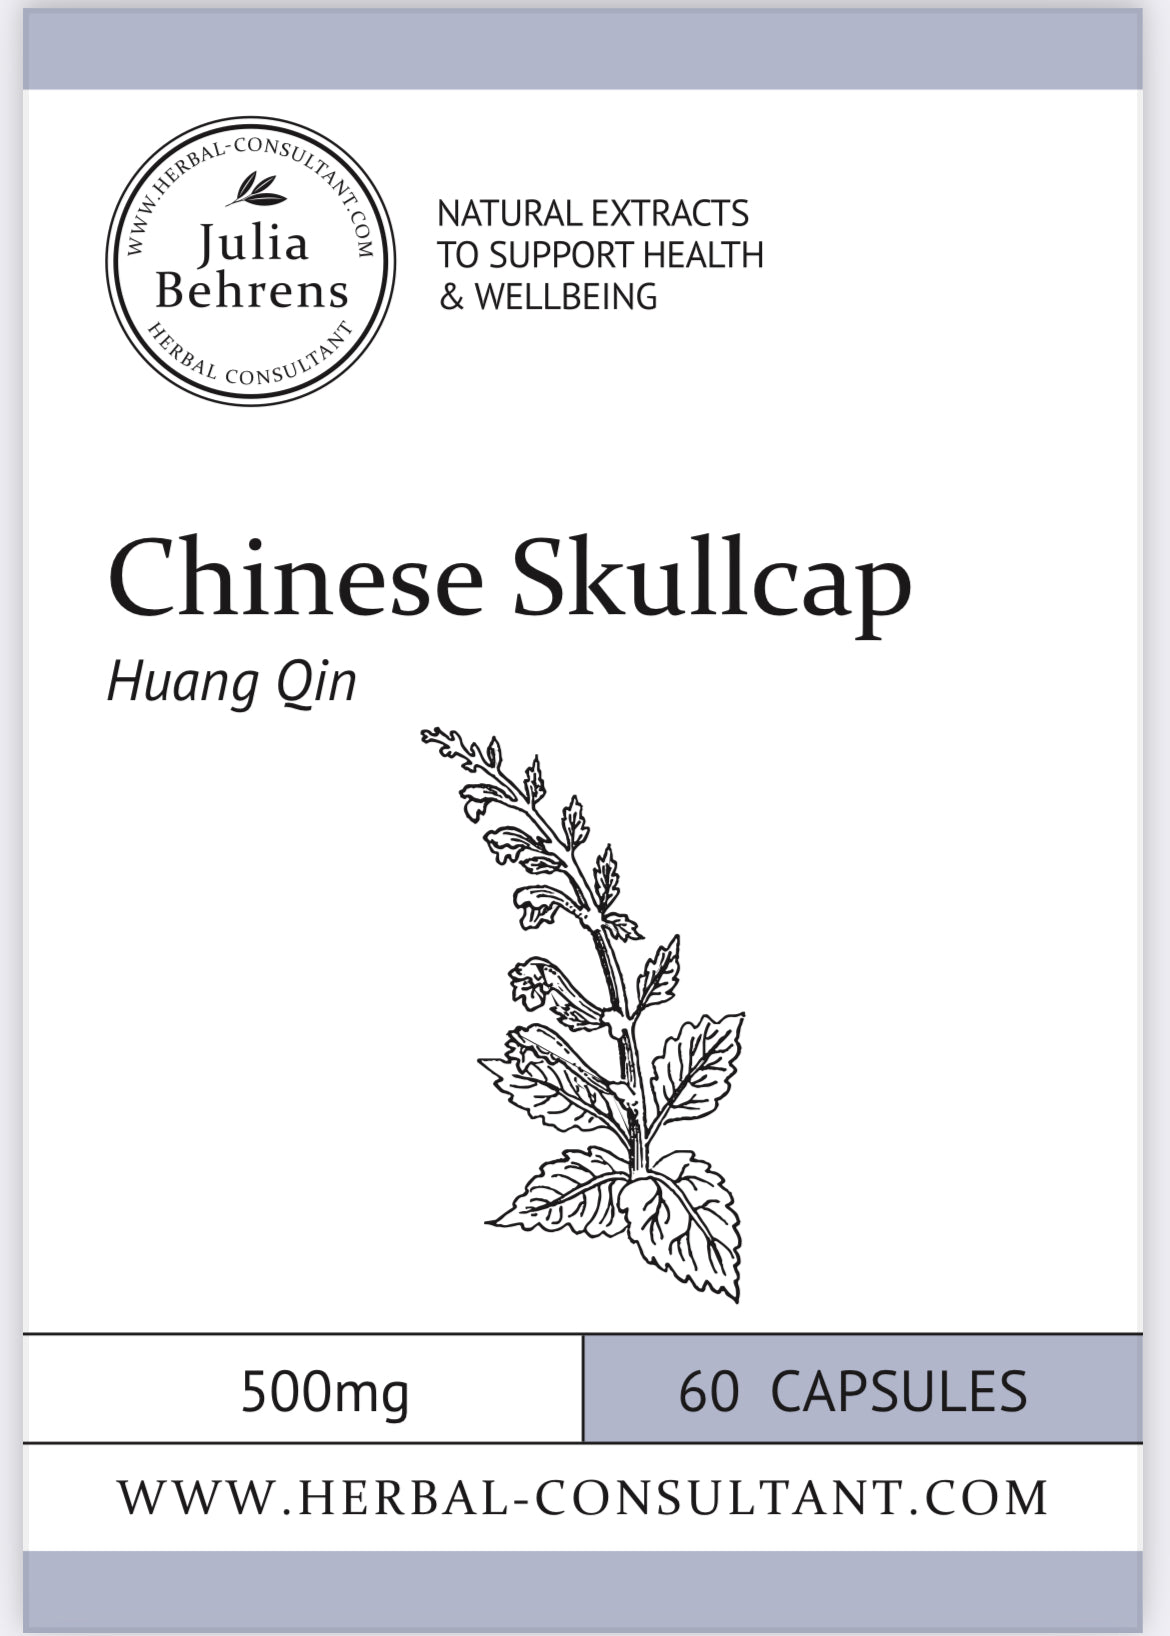 Chinese Skullcap capsules  by Julia Behrens